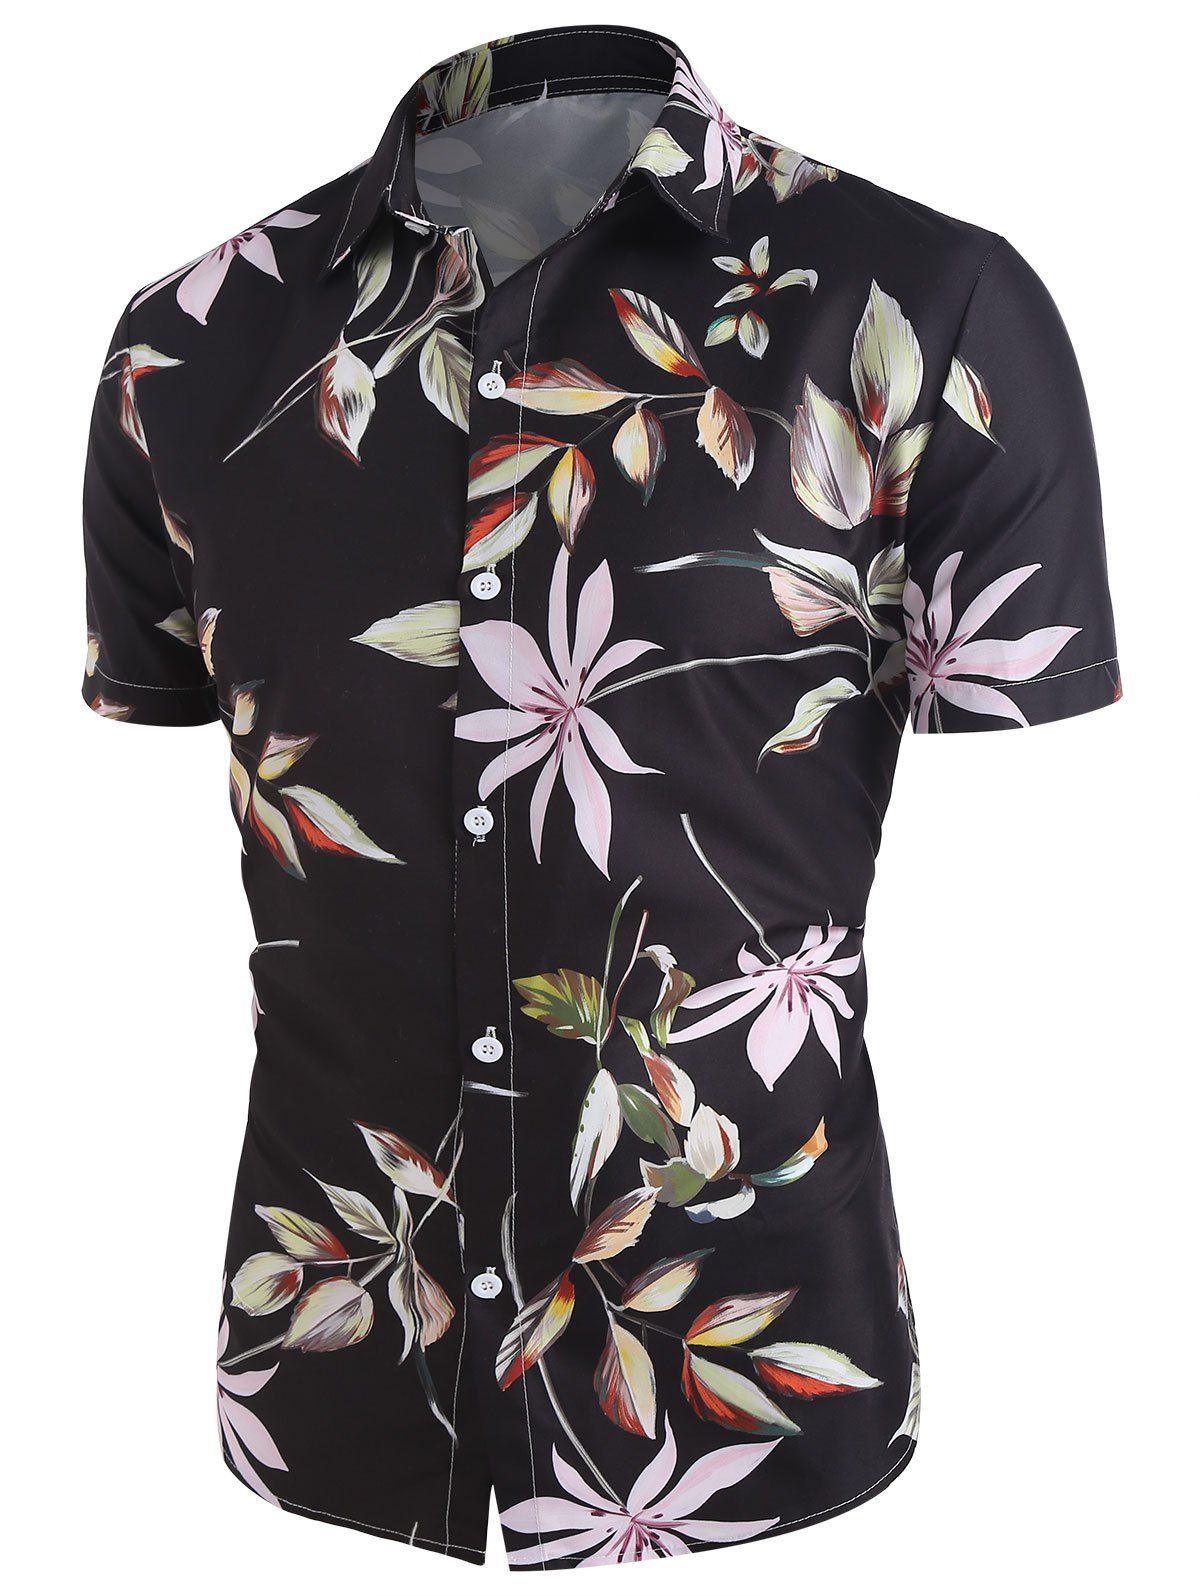 Flower Leaf Print Vacation Shirt - BLACK M